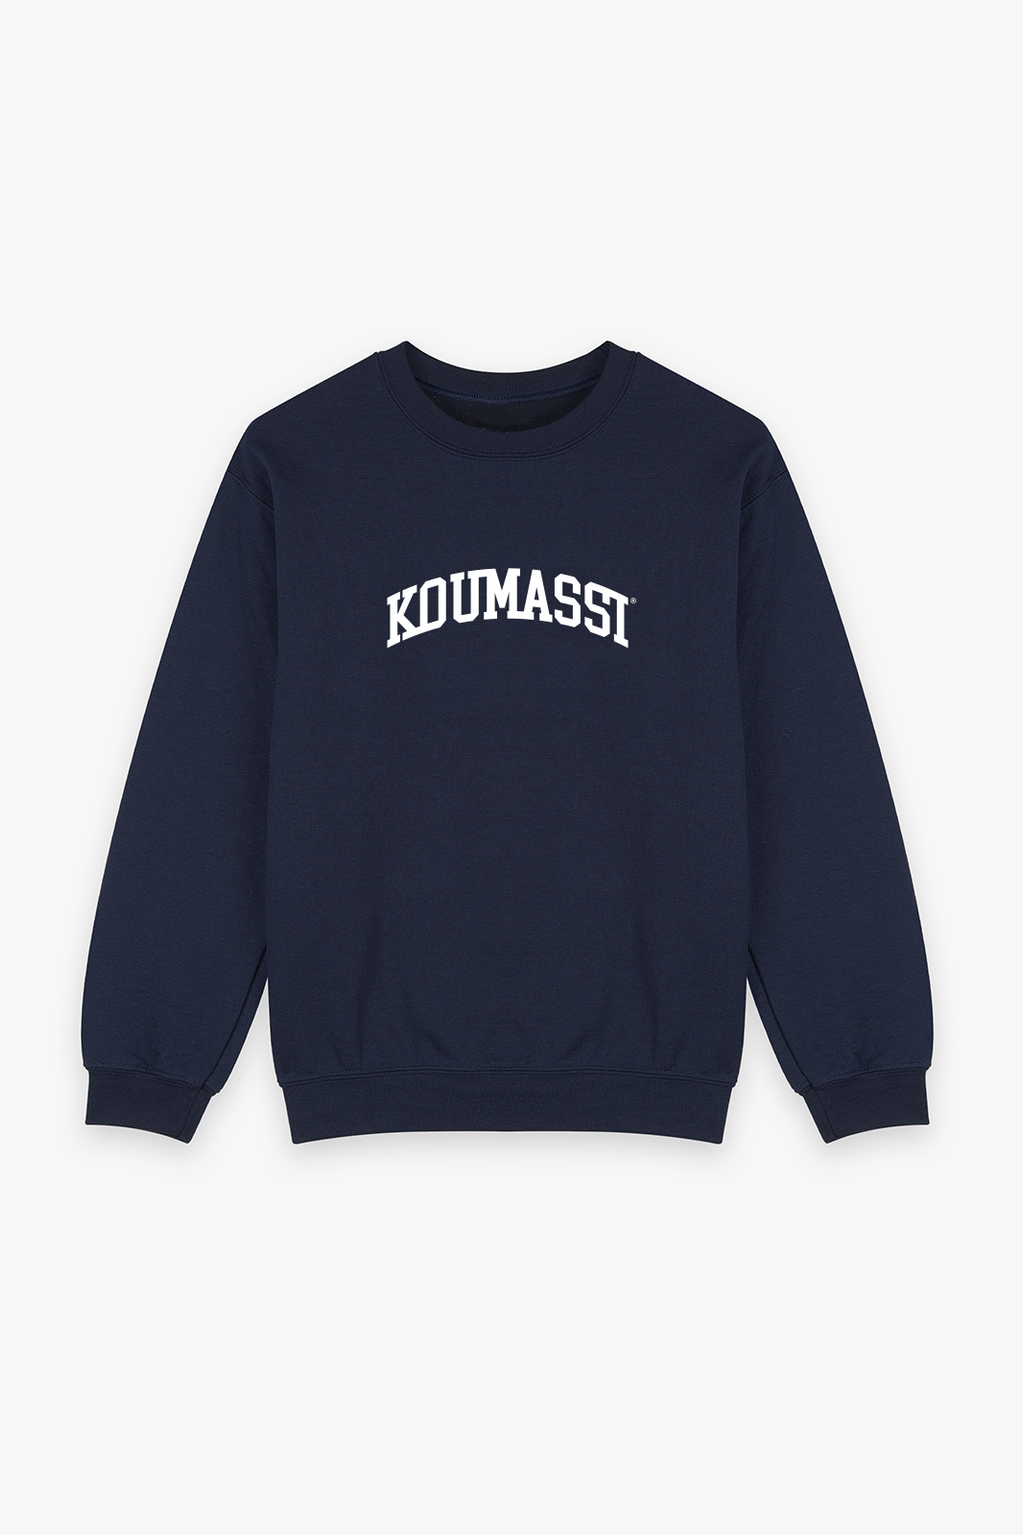 Koumassi Sweatshirt Navy